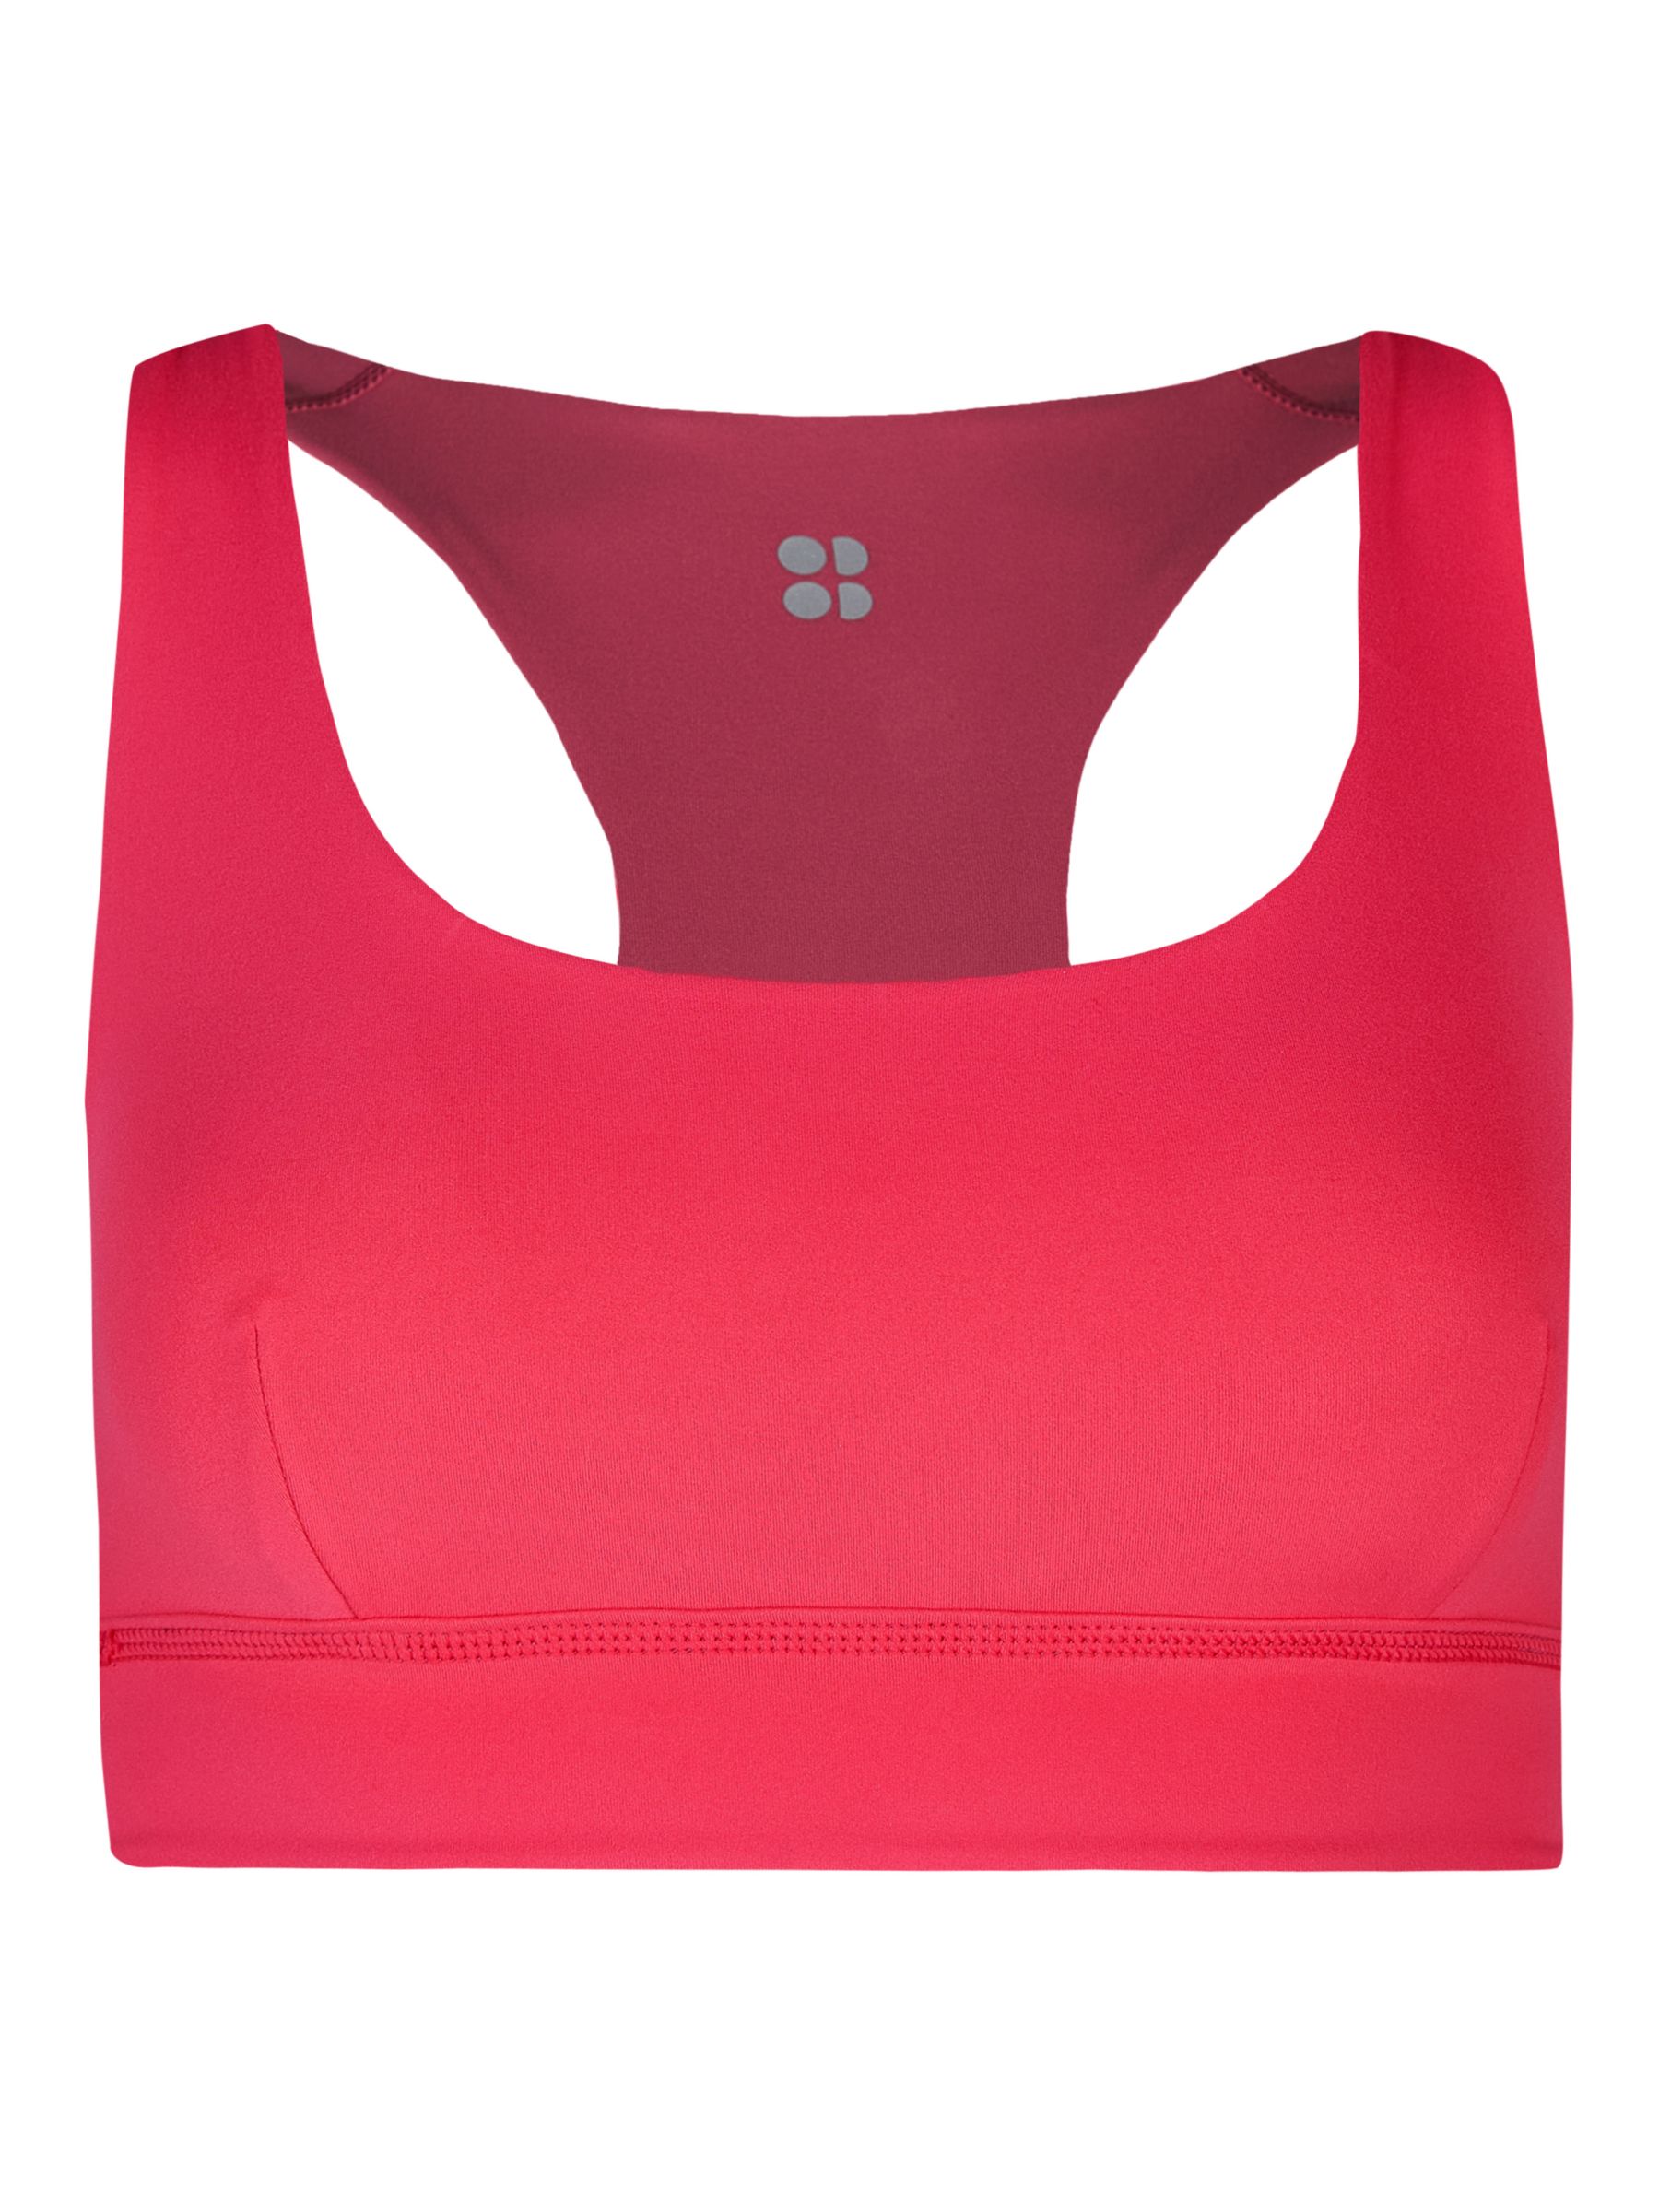 Super Soft Reversible Yoga Bra - AmbientPink GlowPink